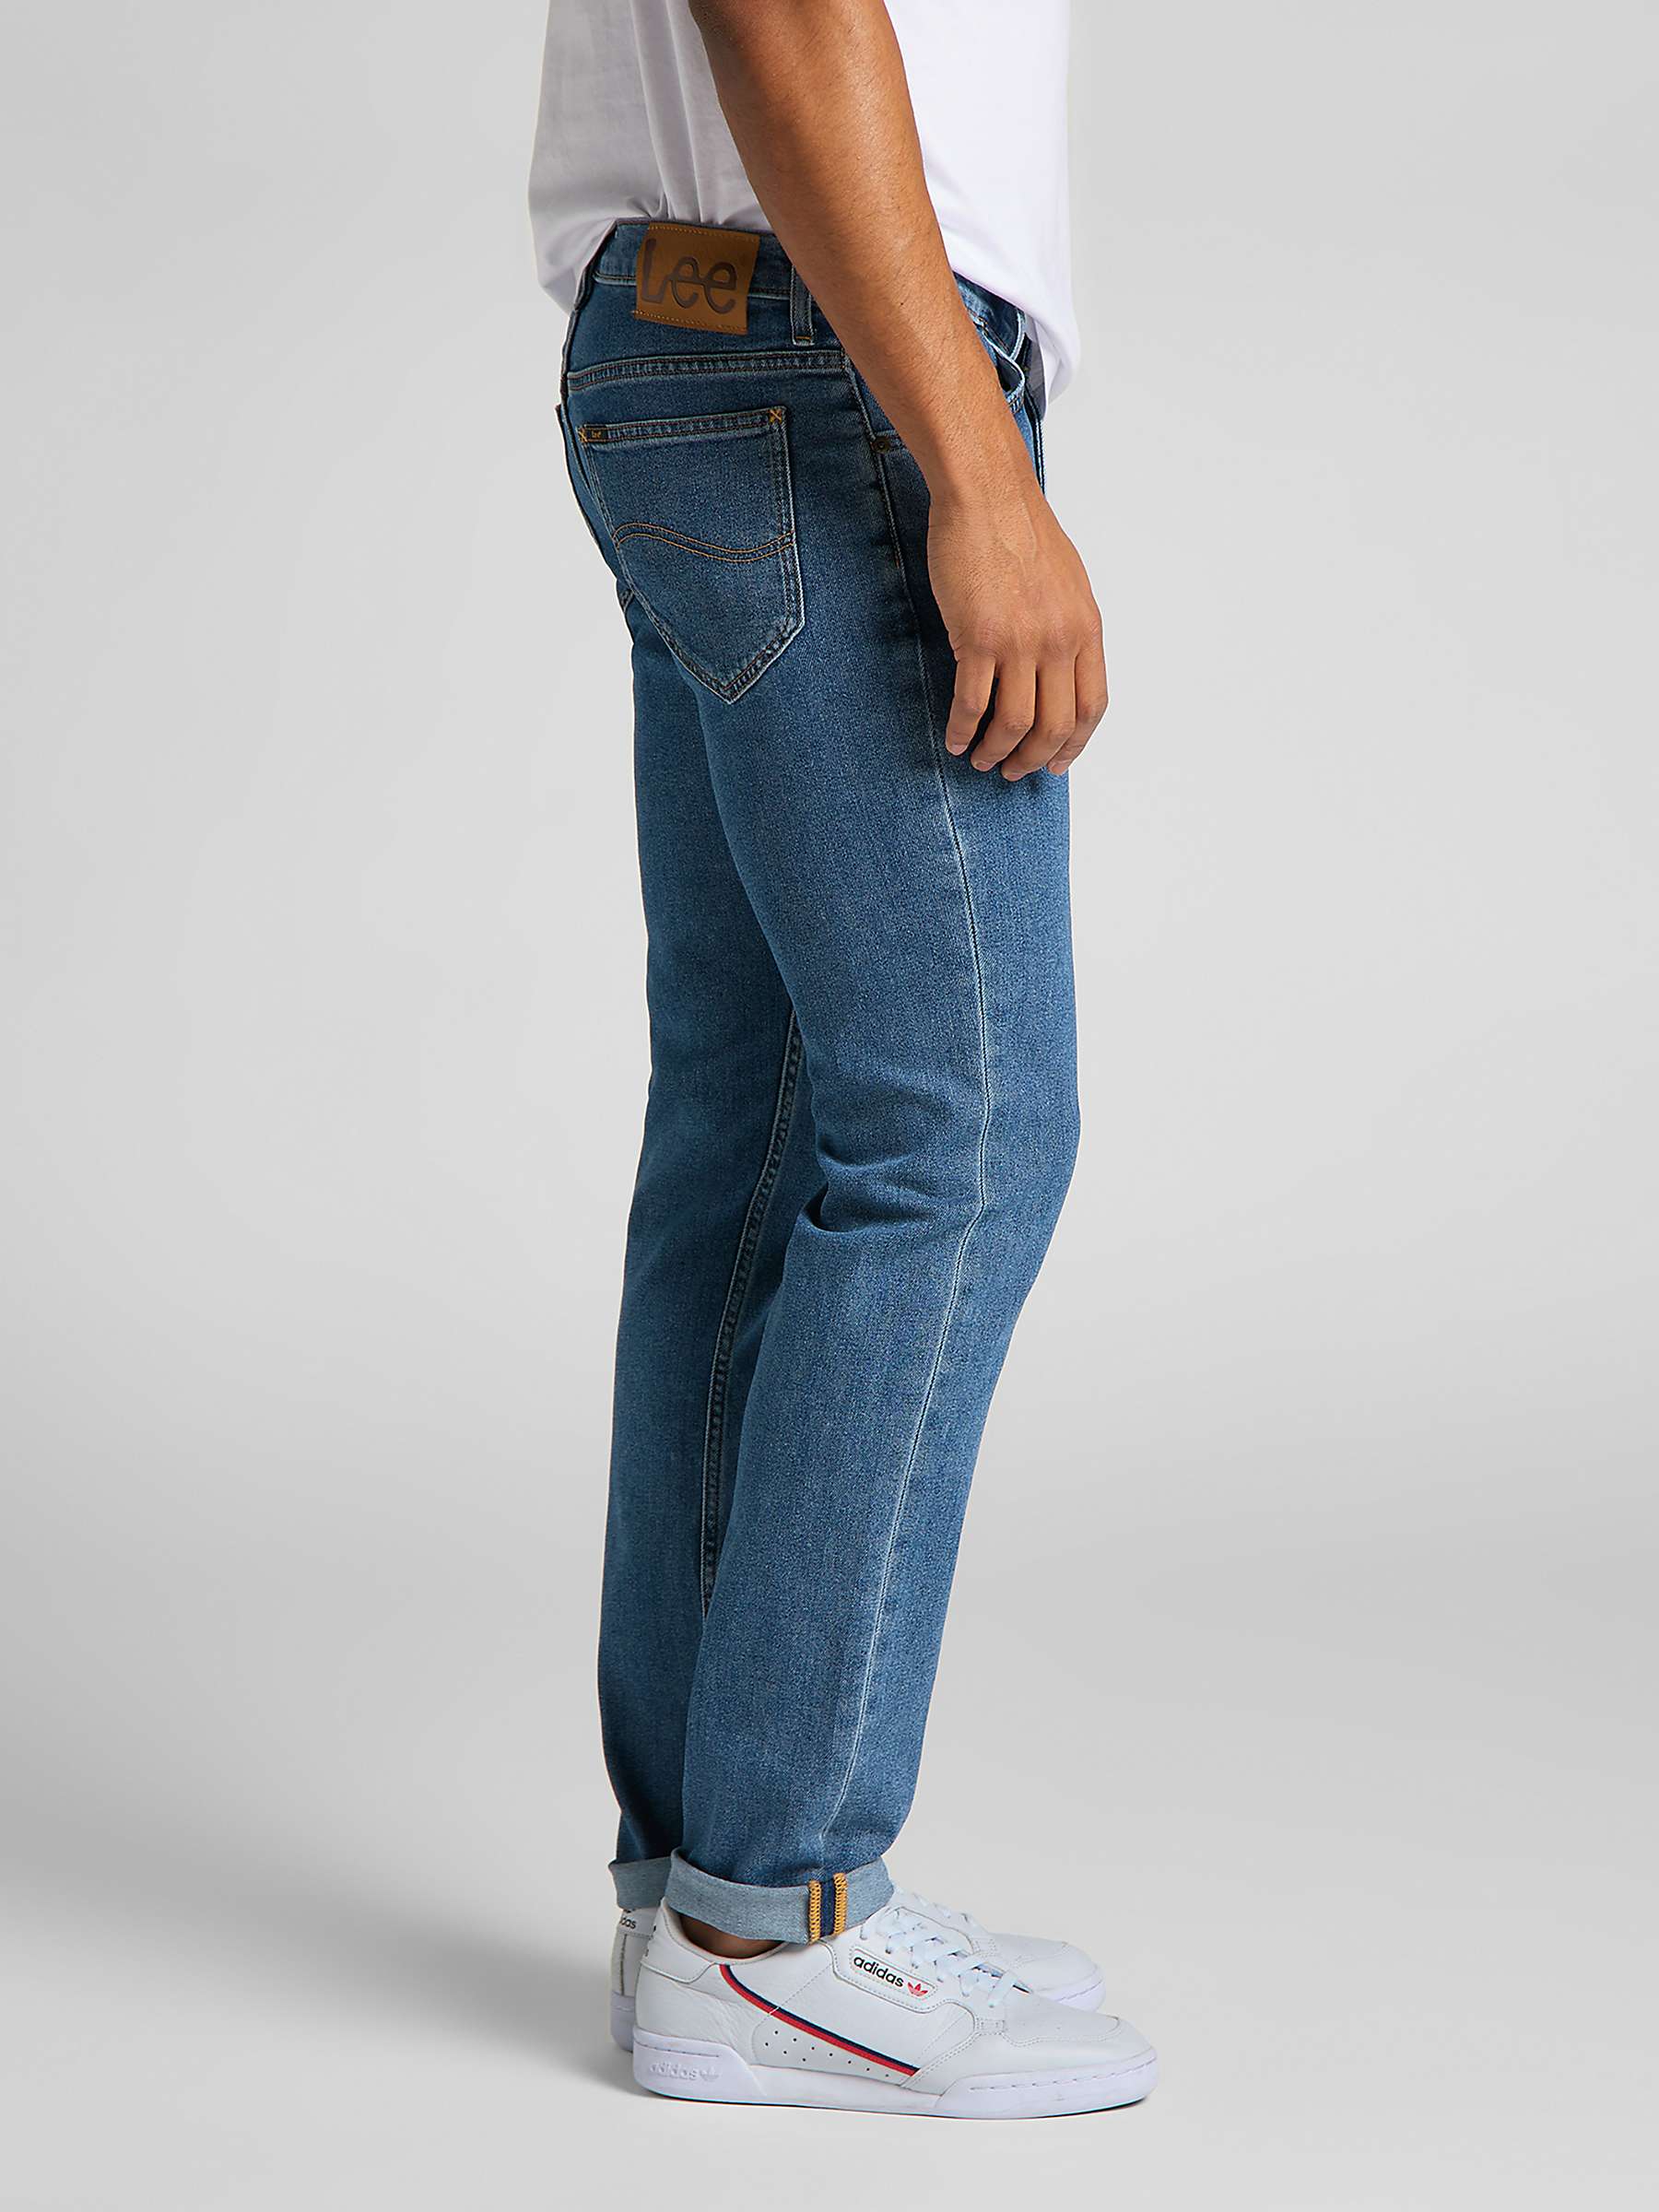 Buy Lee Rider Slim Fit Denim Jeans, Mid Stone Online at johnlewis.com